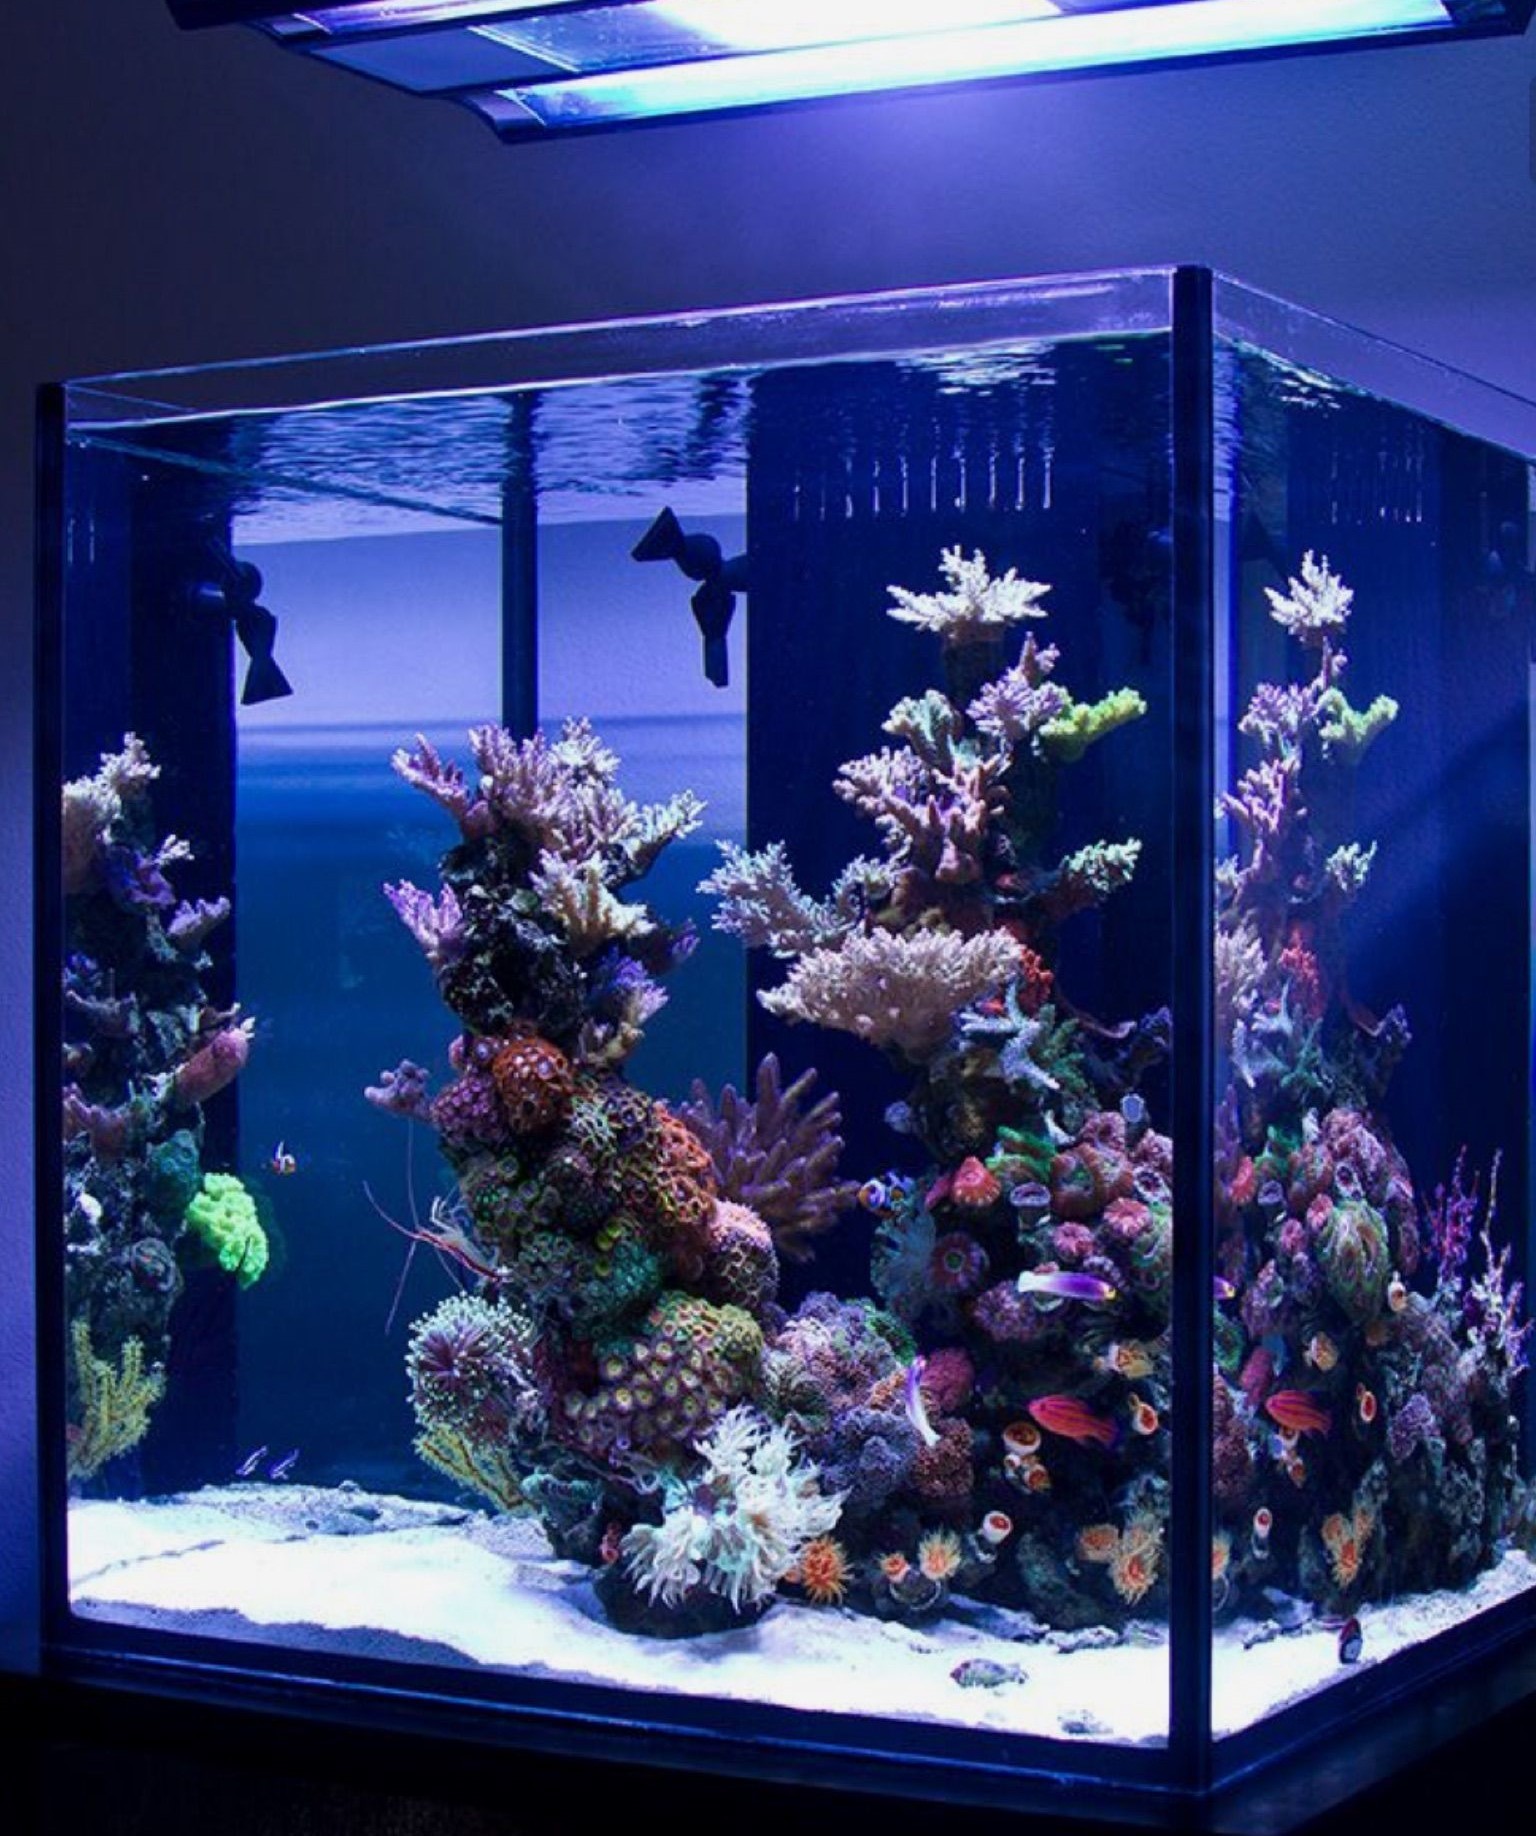 Huge home reef aquarium